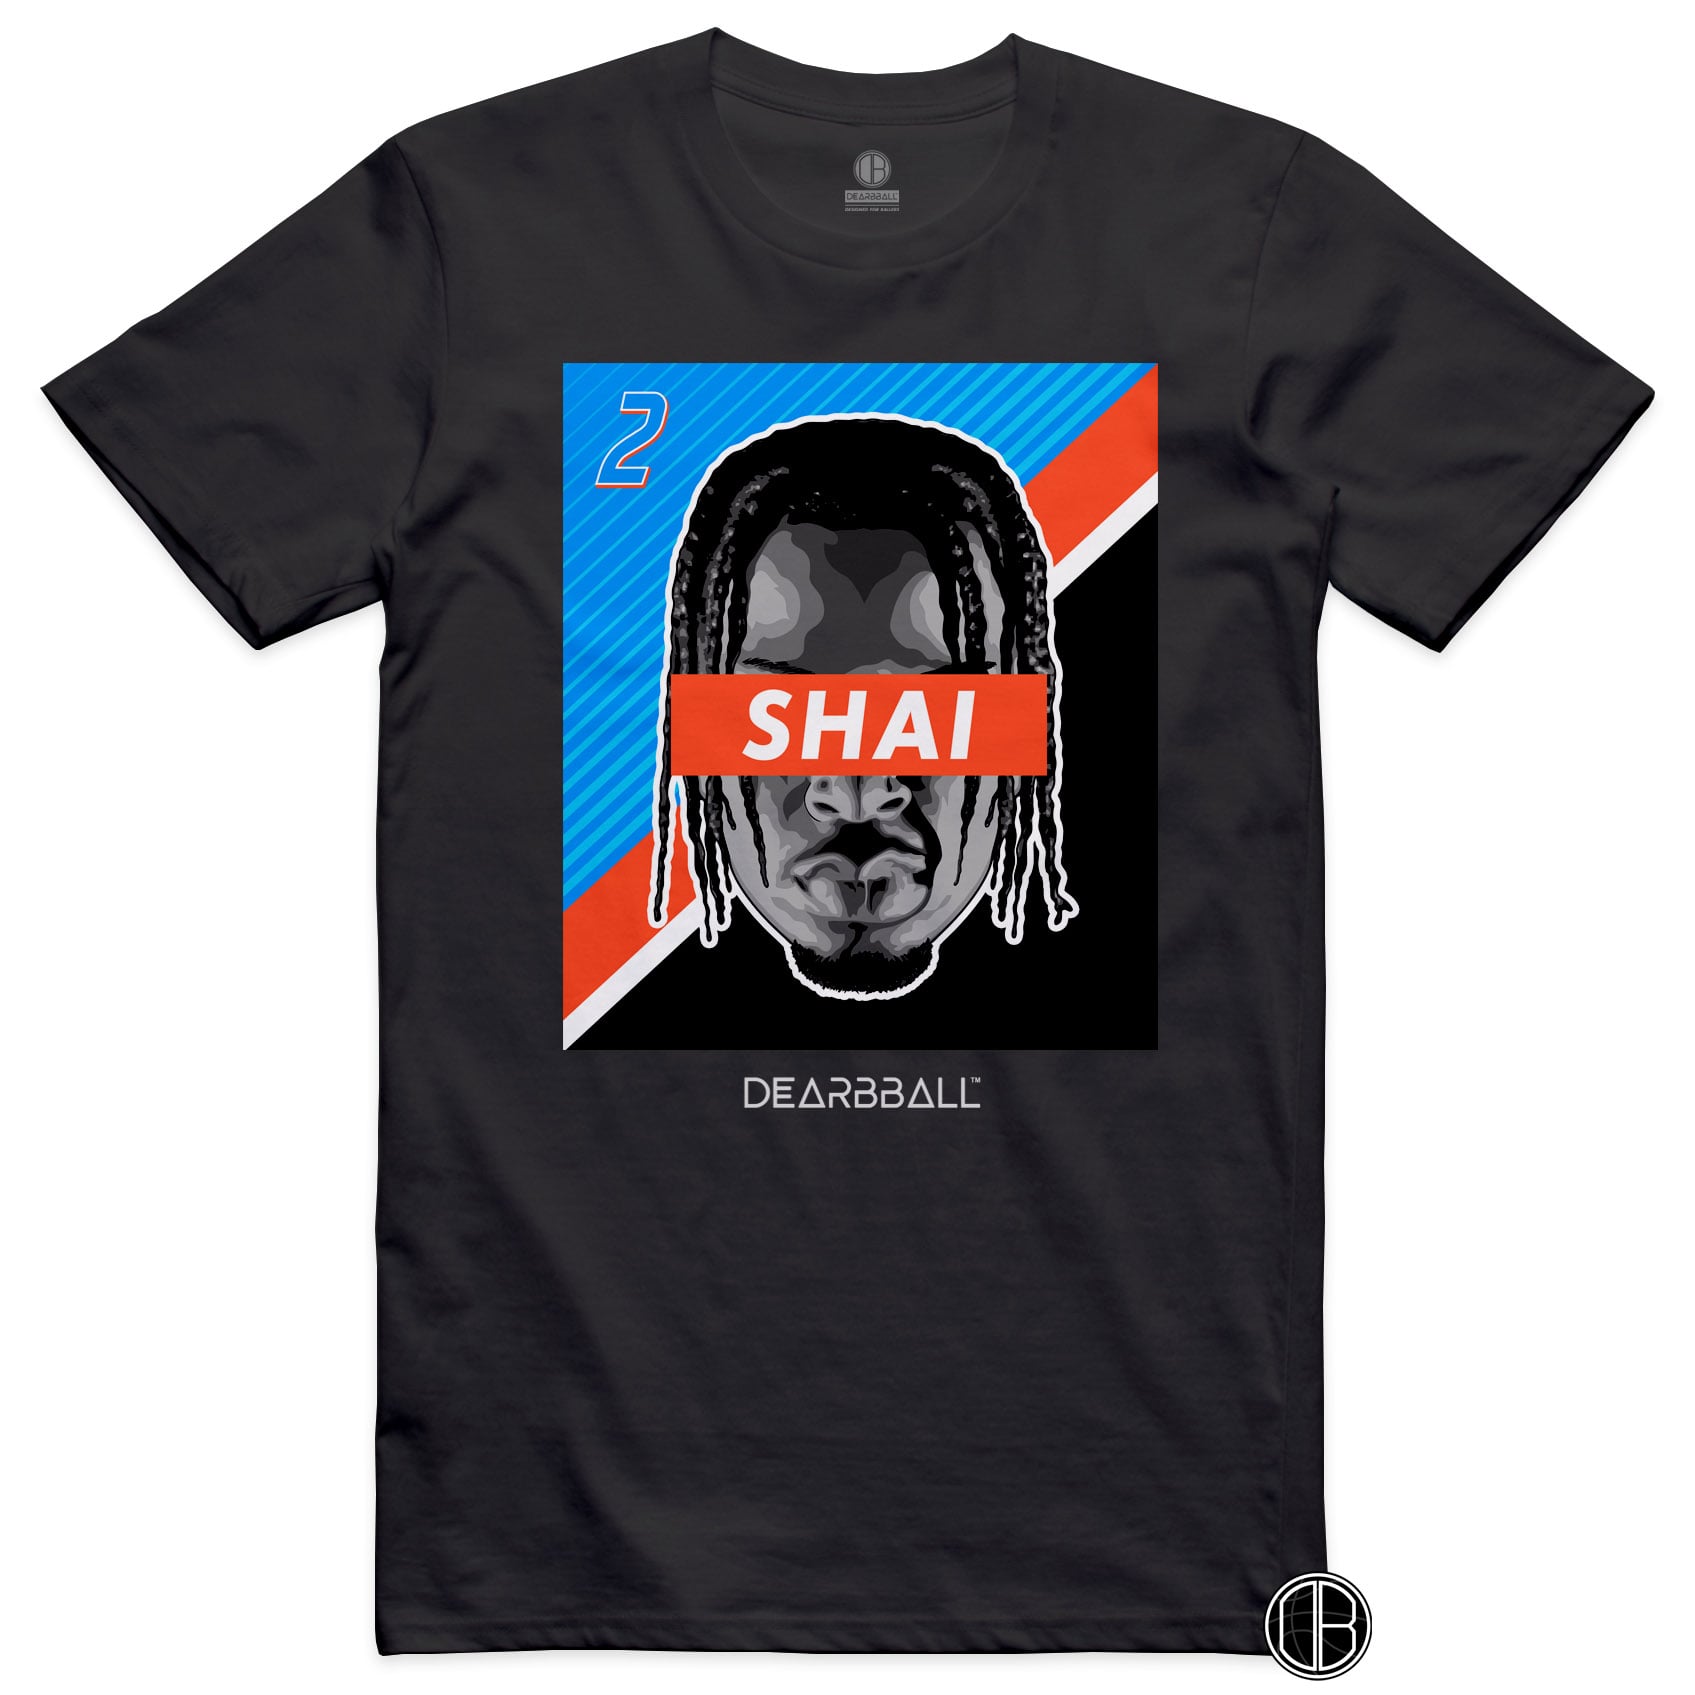 DearBBall T-Shirt - SHAI OKC 2 Edition